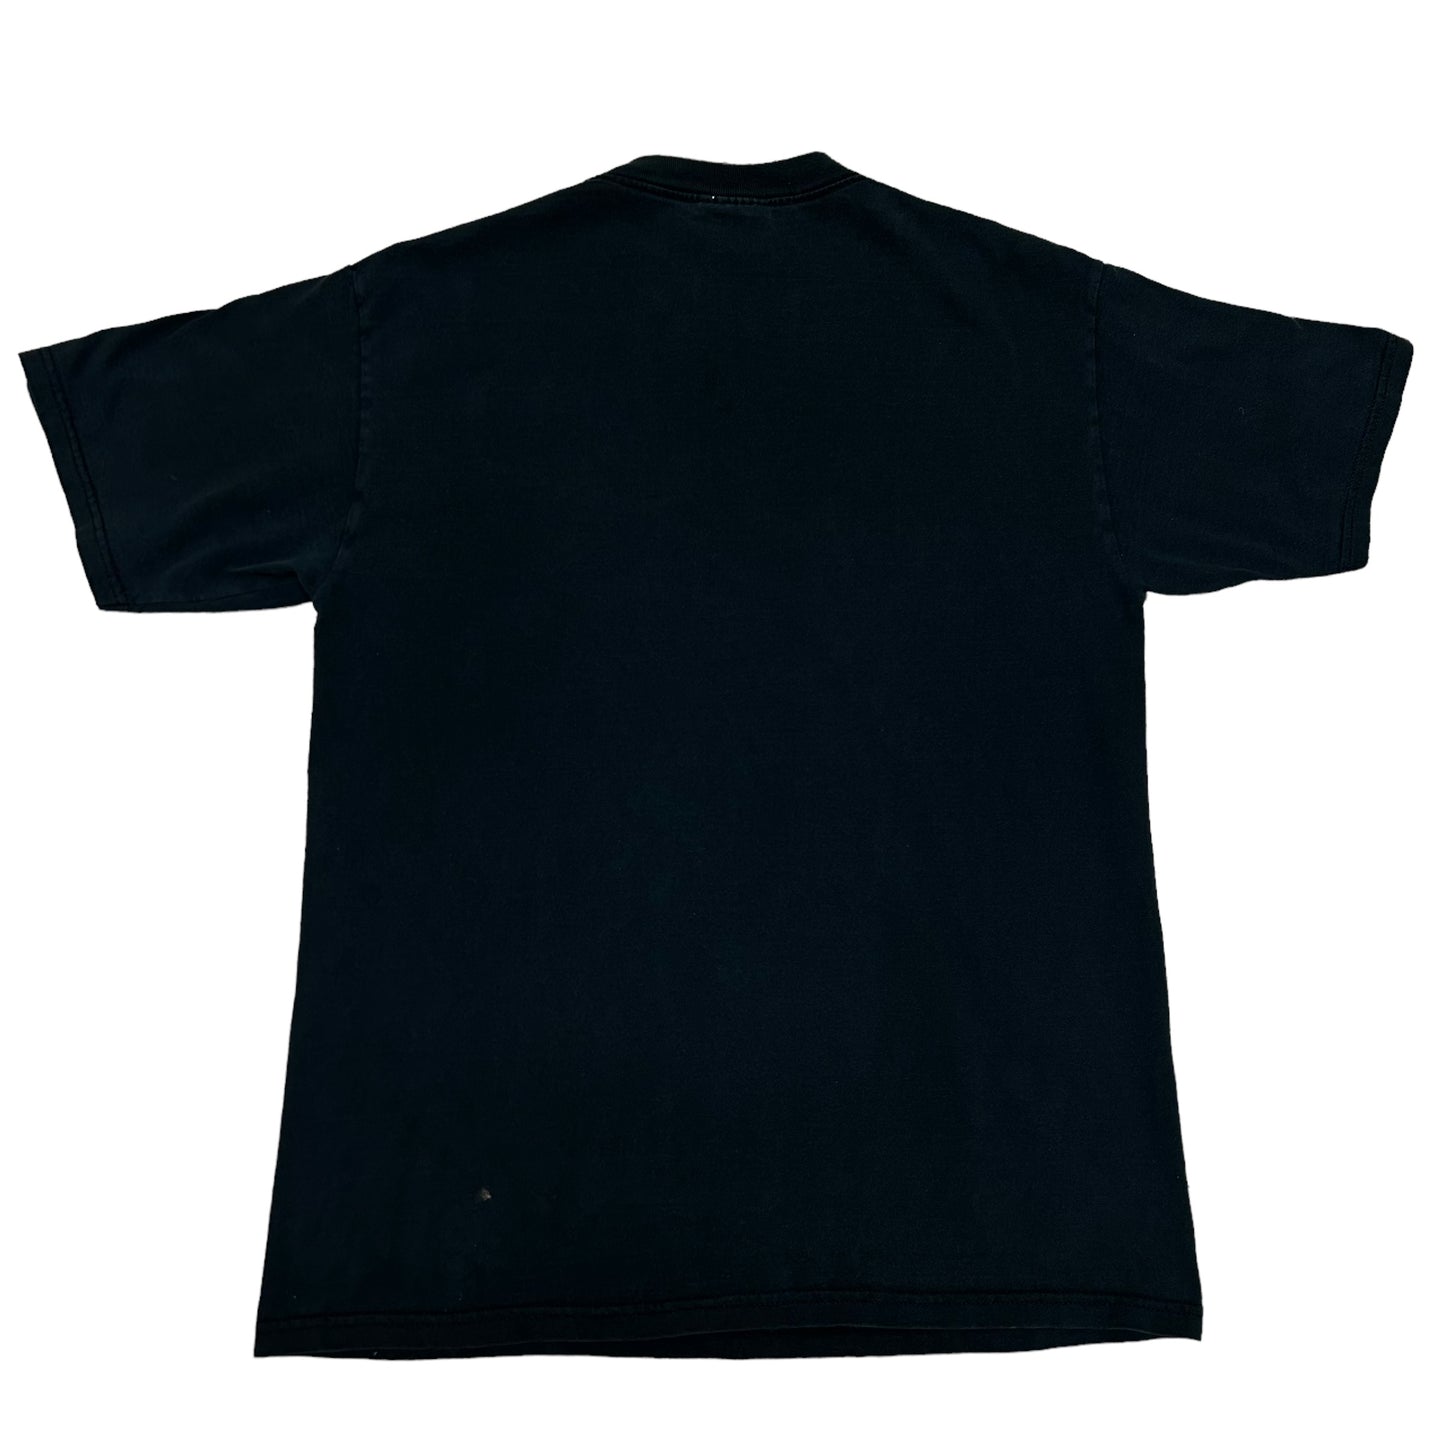 Vintage 1990s Lee Sport Atlanta Falcons Black Graphic T-Shirt - Size Large